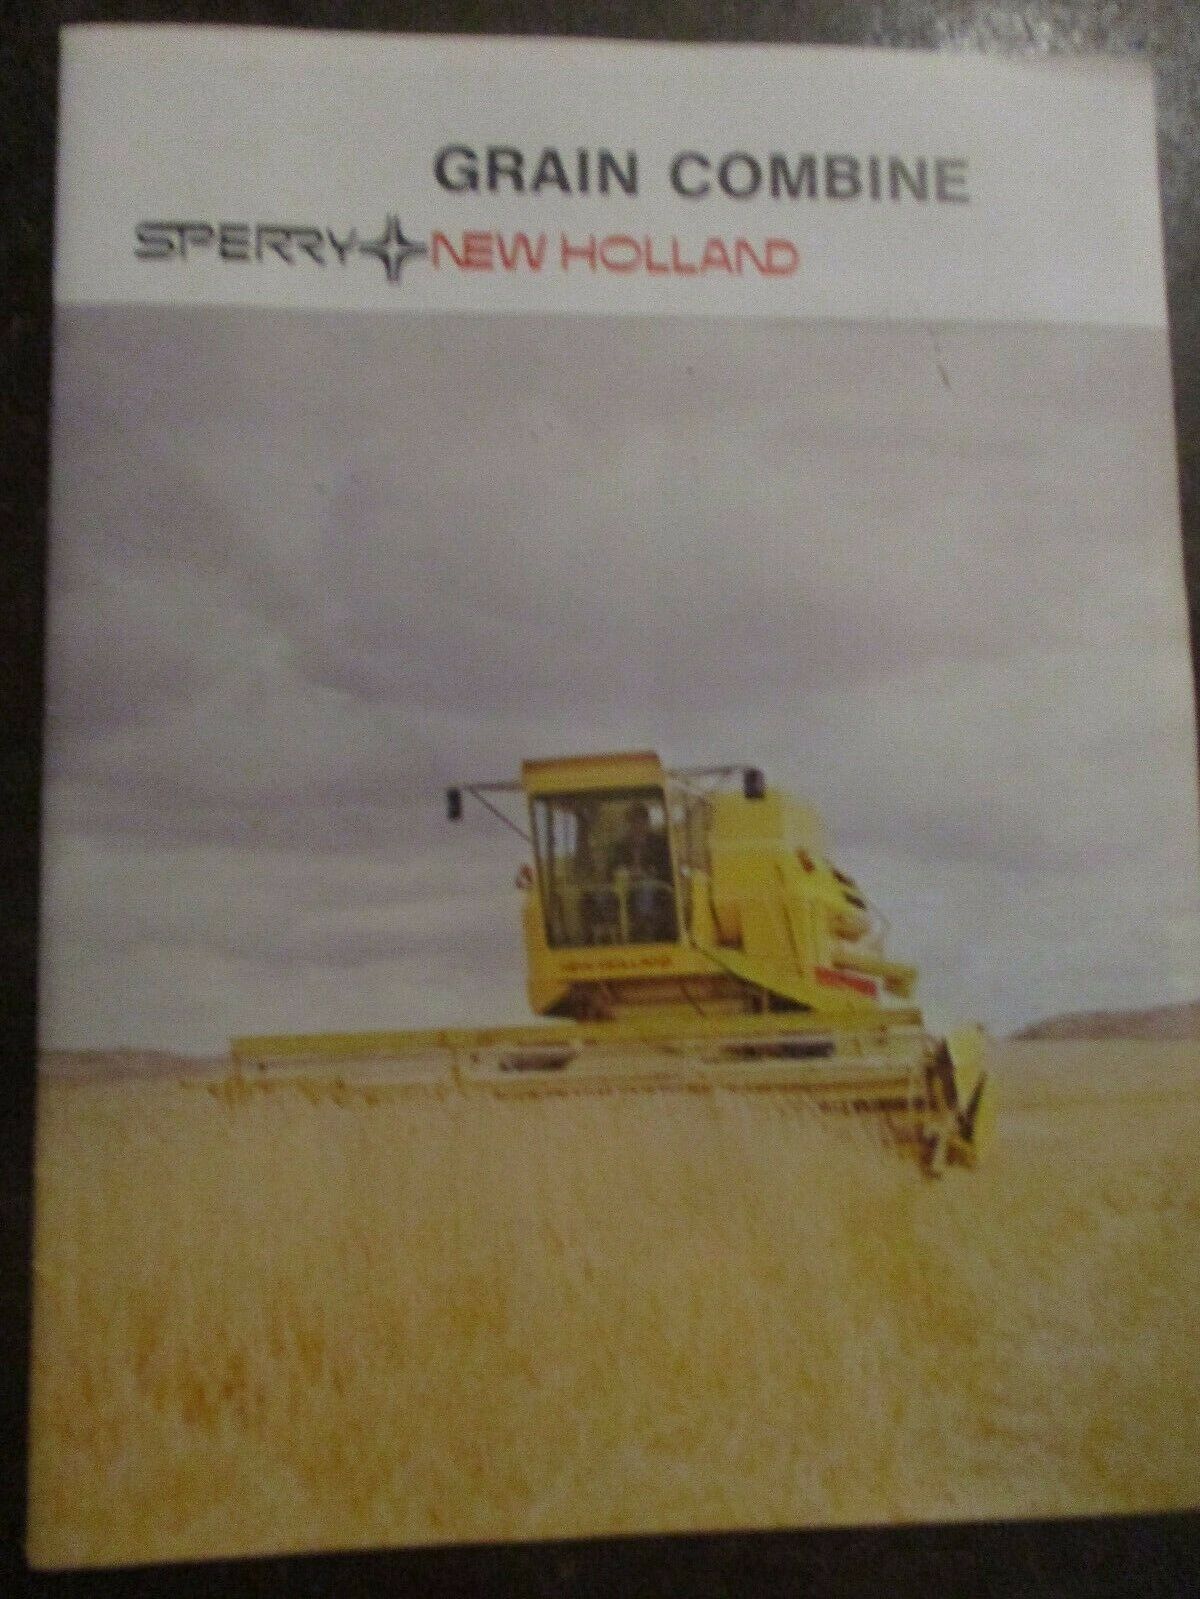 Original  Advertising Brochure for New Holland Grain Combines, Great Color, 1974